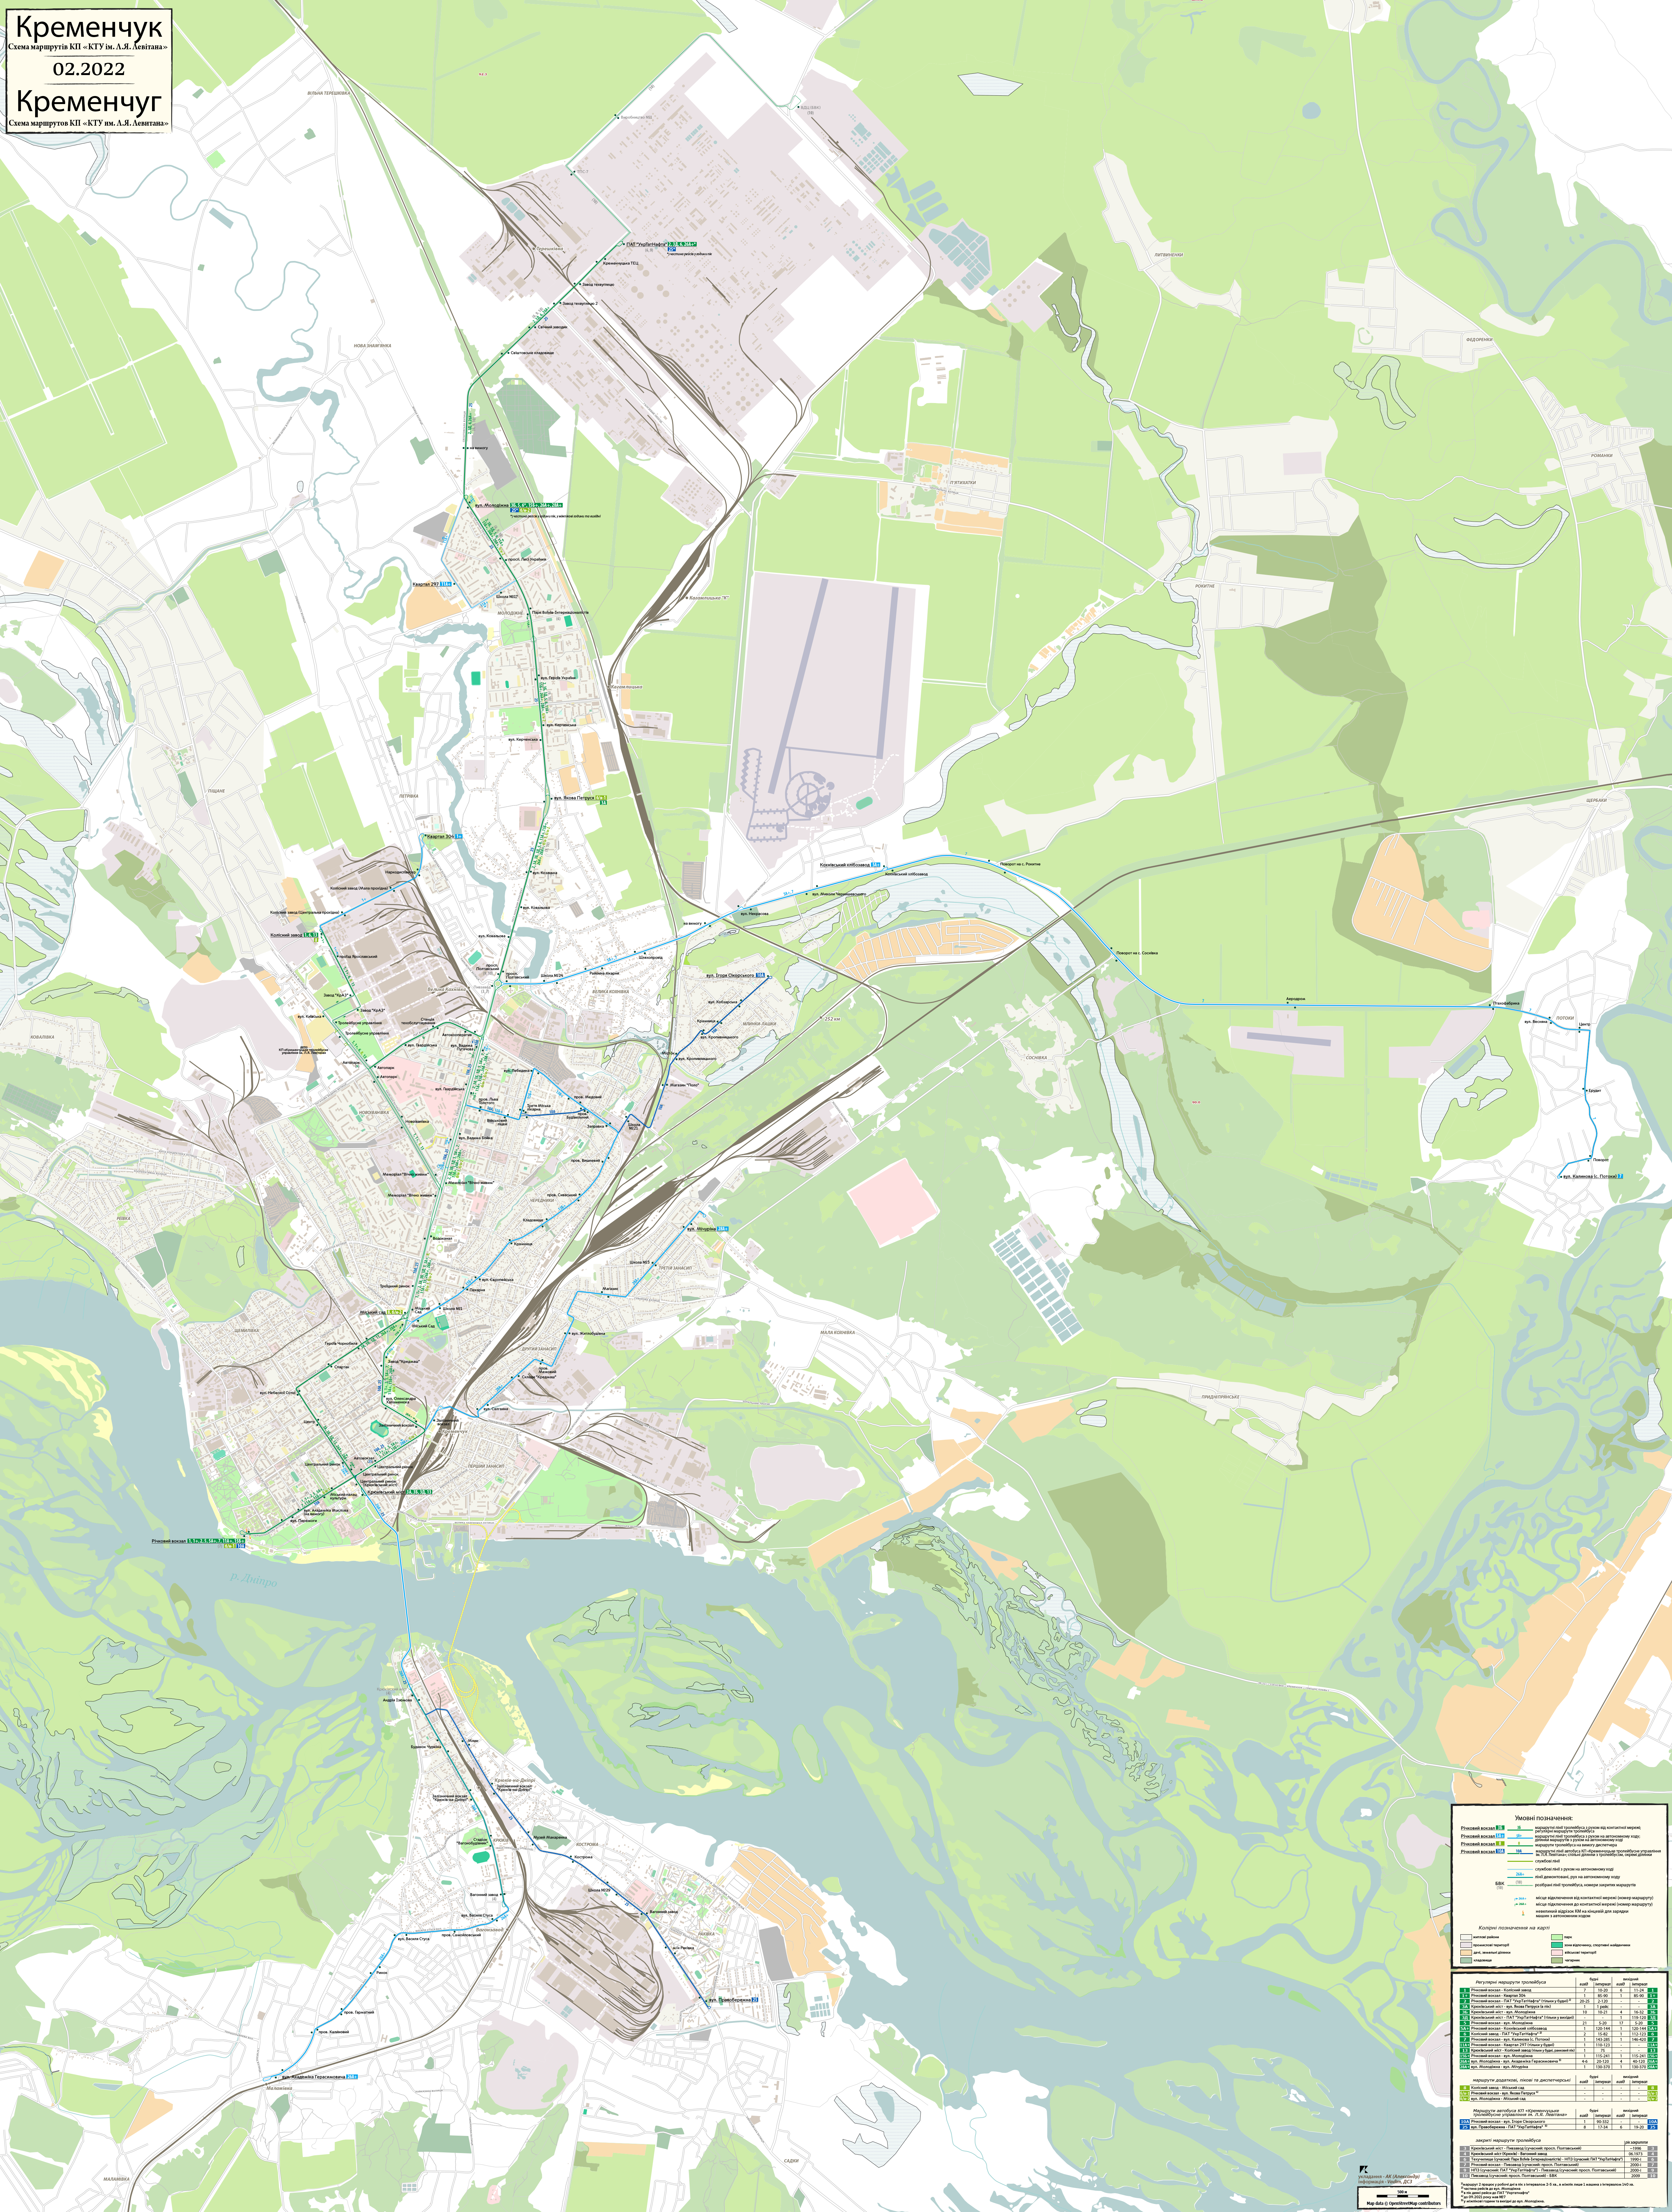 Kremenchuk — Citywide Maps; Maps made with OpenStreetMap